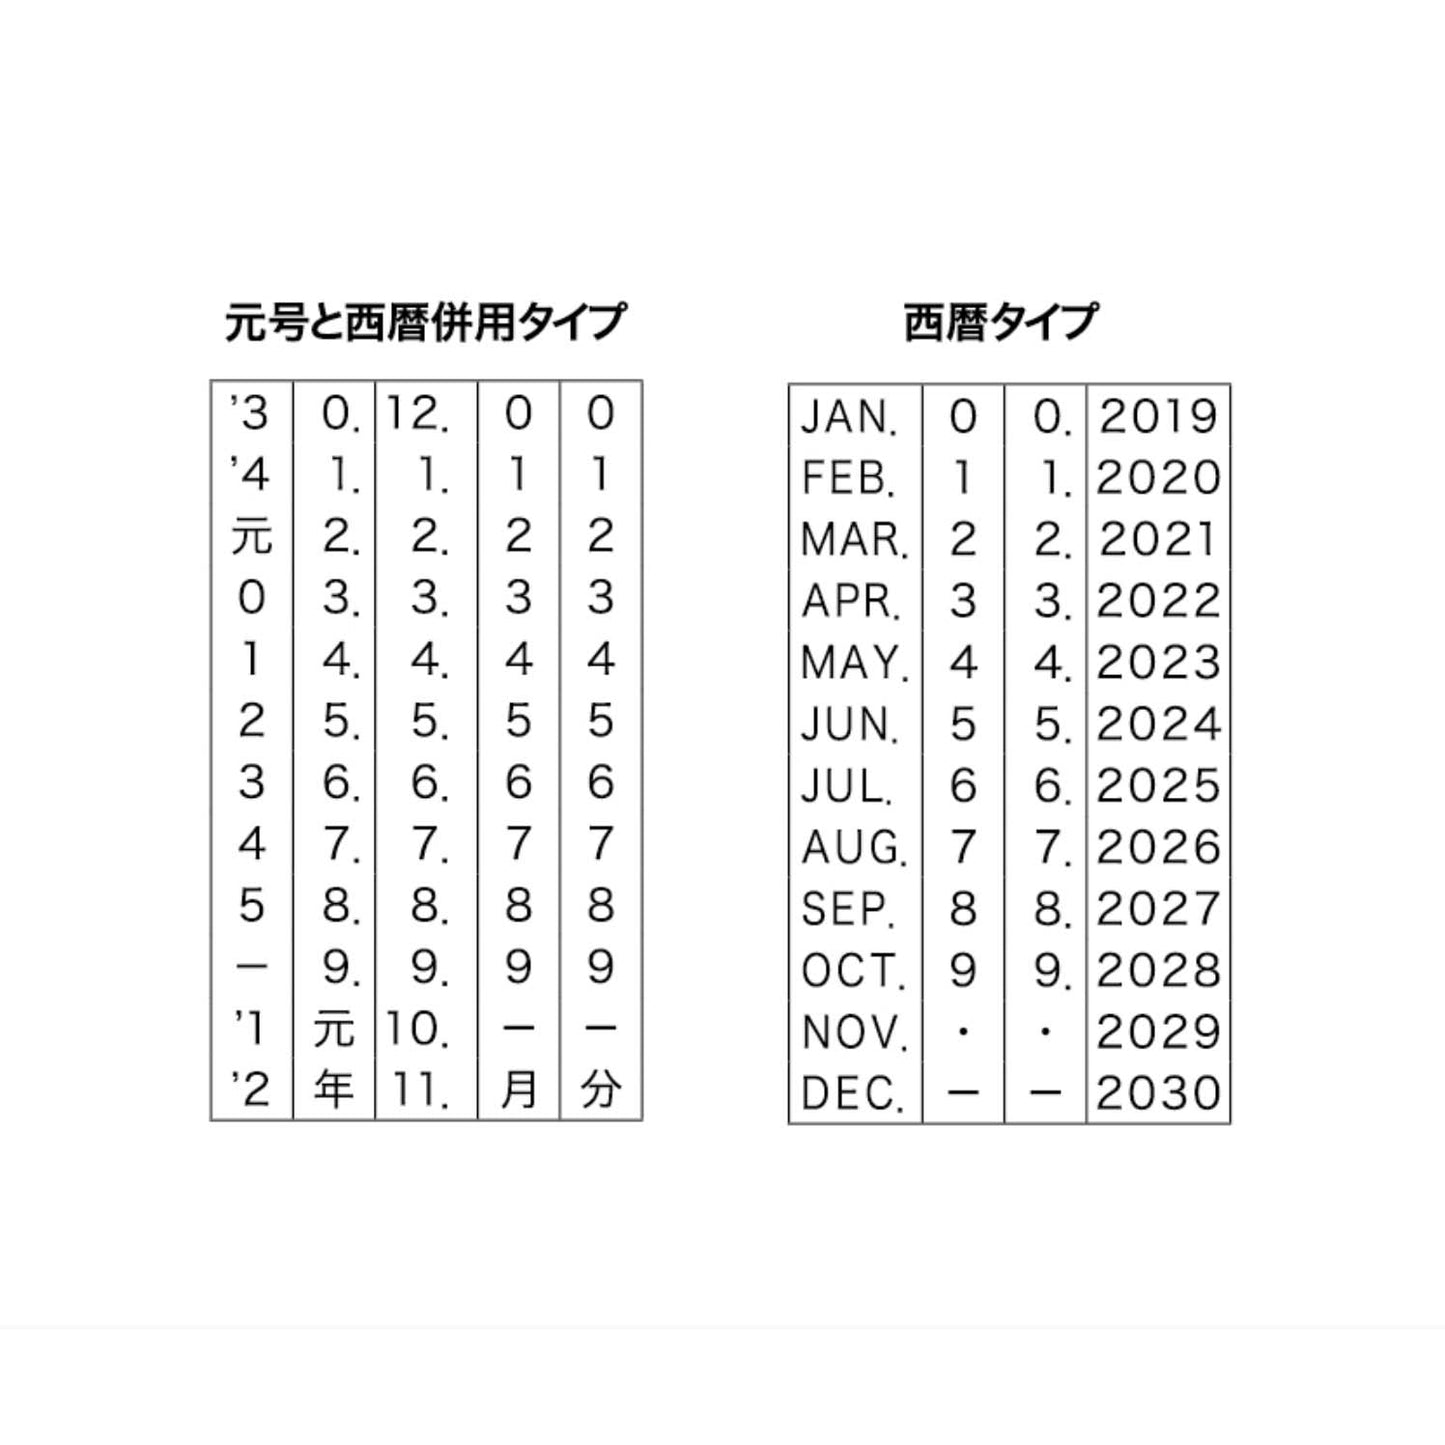 Sanby x mizushima Frame Date Stamp Schedule